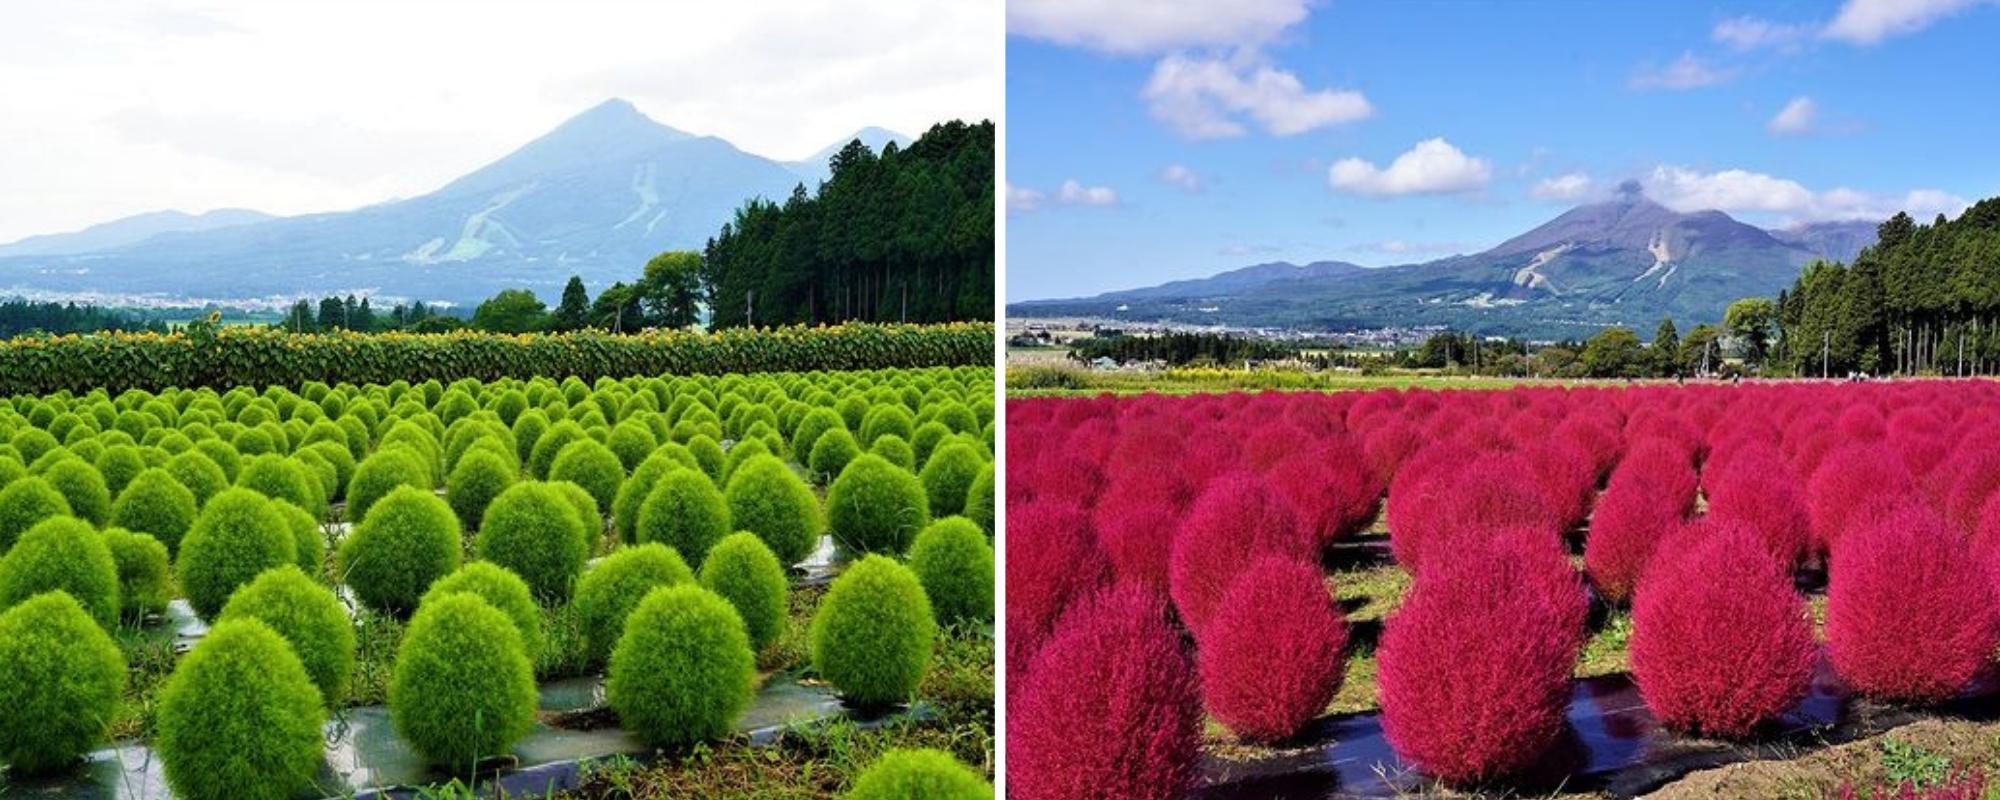 Inawashiro Herb Garden - Collage of red and green Kochia